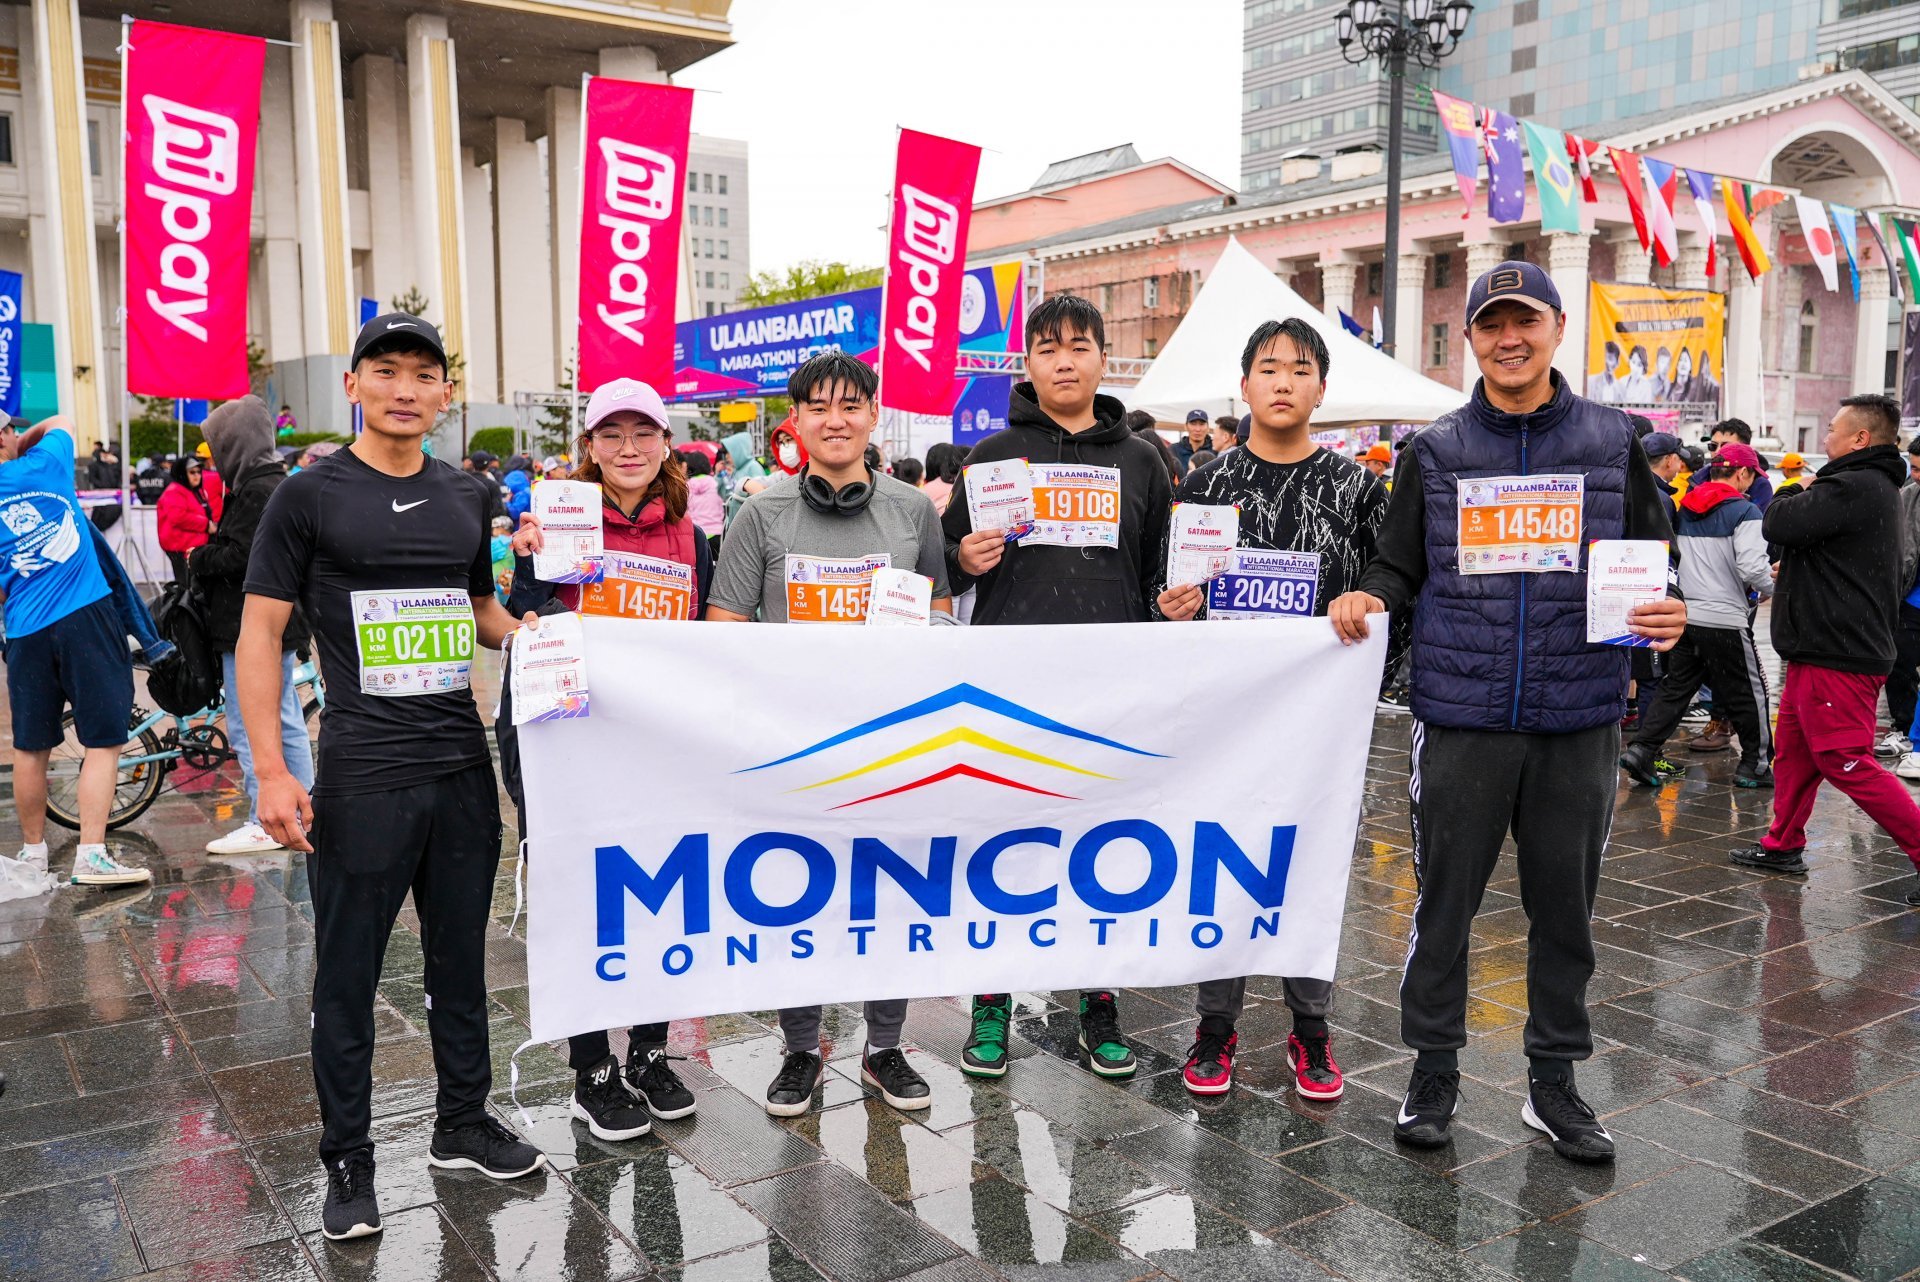 MONCON runners in the "Ulaanbaatar Marathon 2022" Moncon